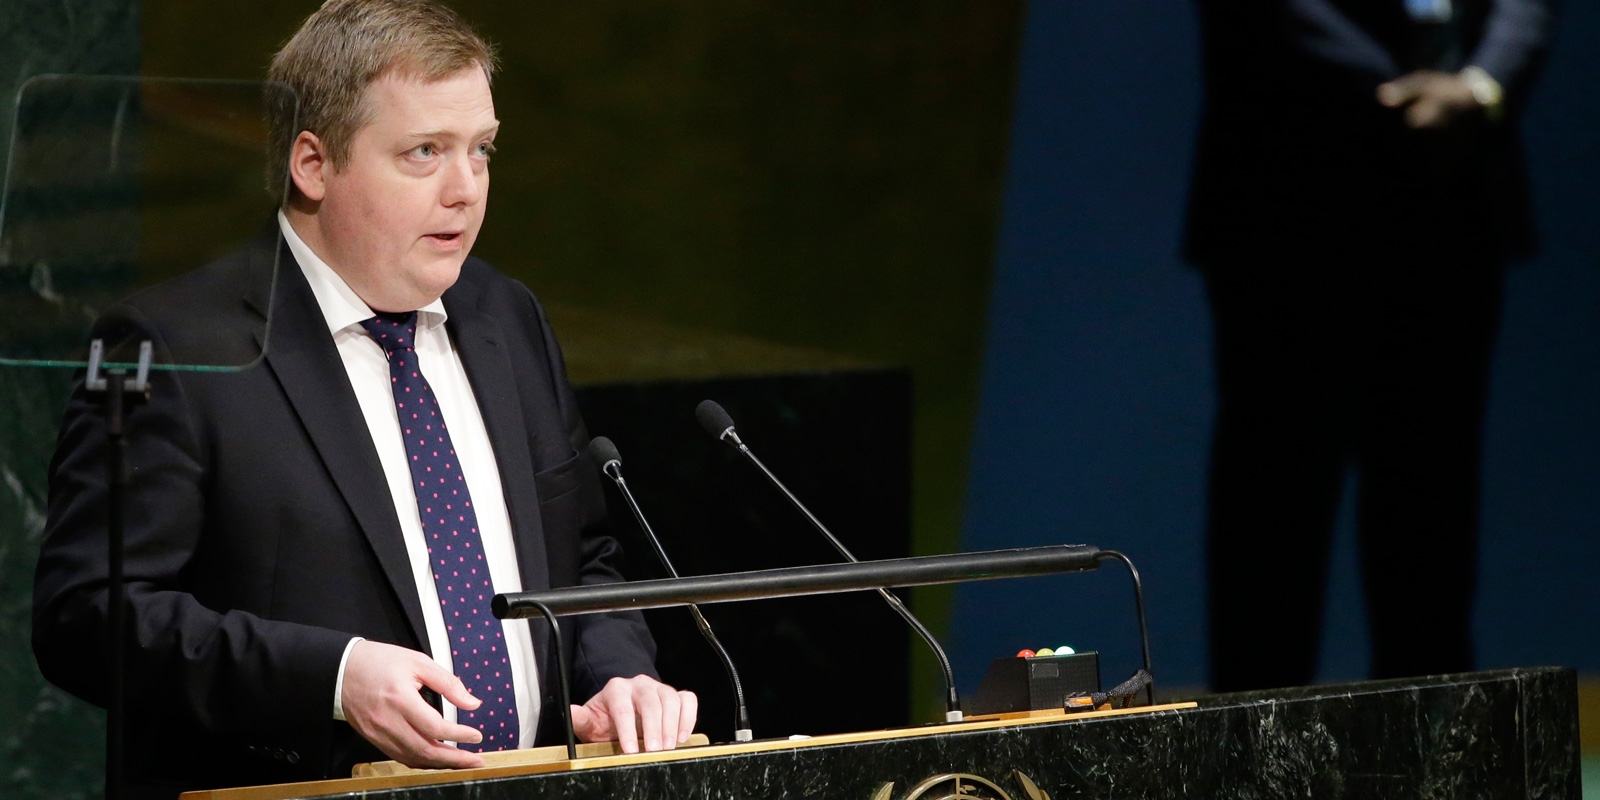 Prime Minister of Iceland Sigmundur David Gunnlaugsson